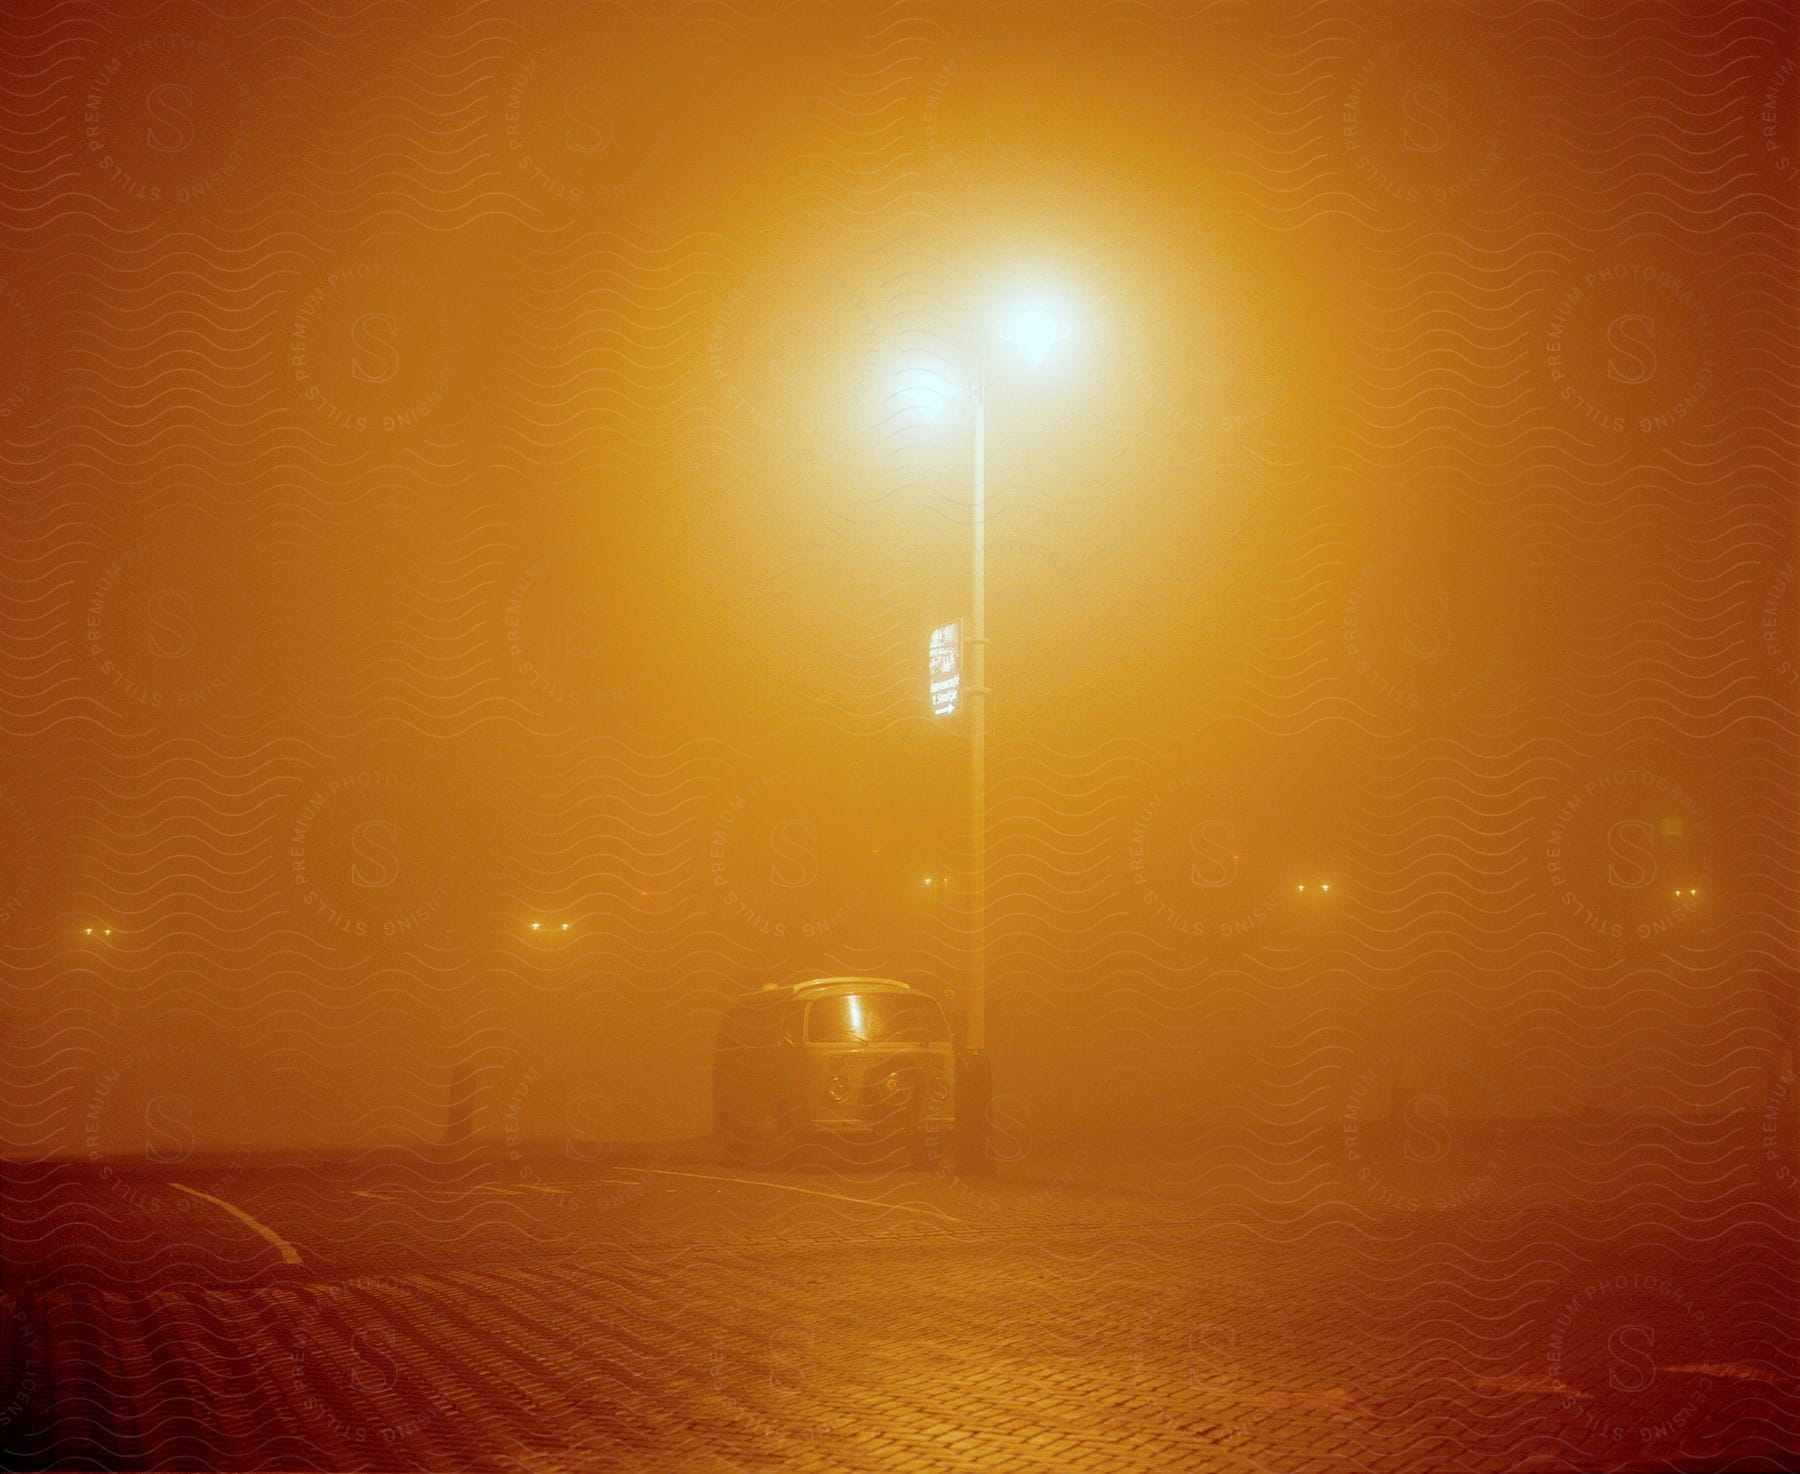 A van parked under orange street lights on a hazy night